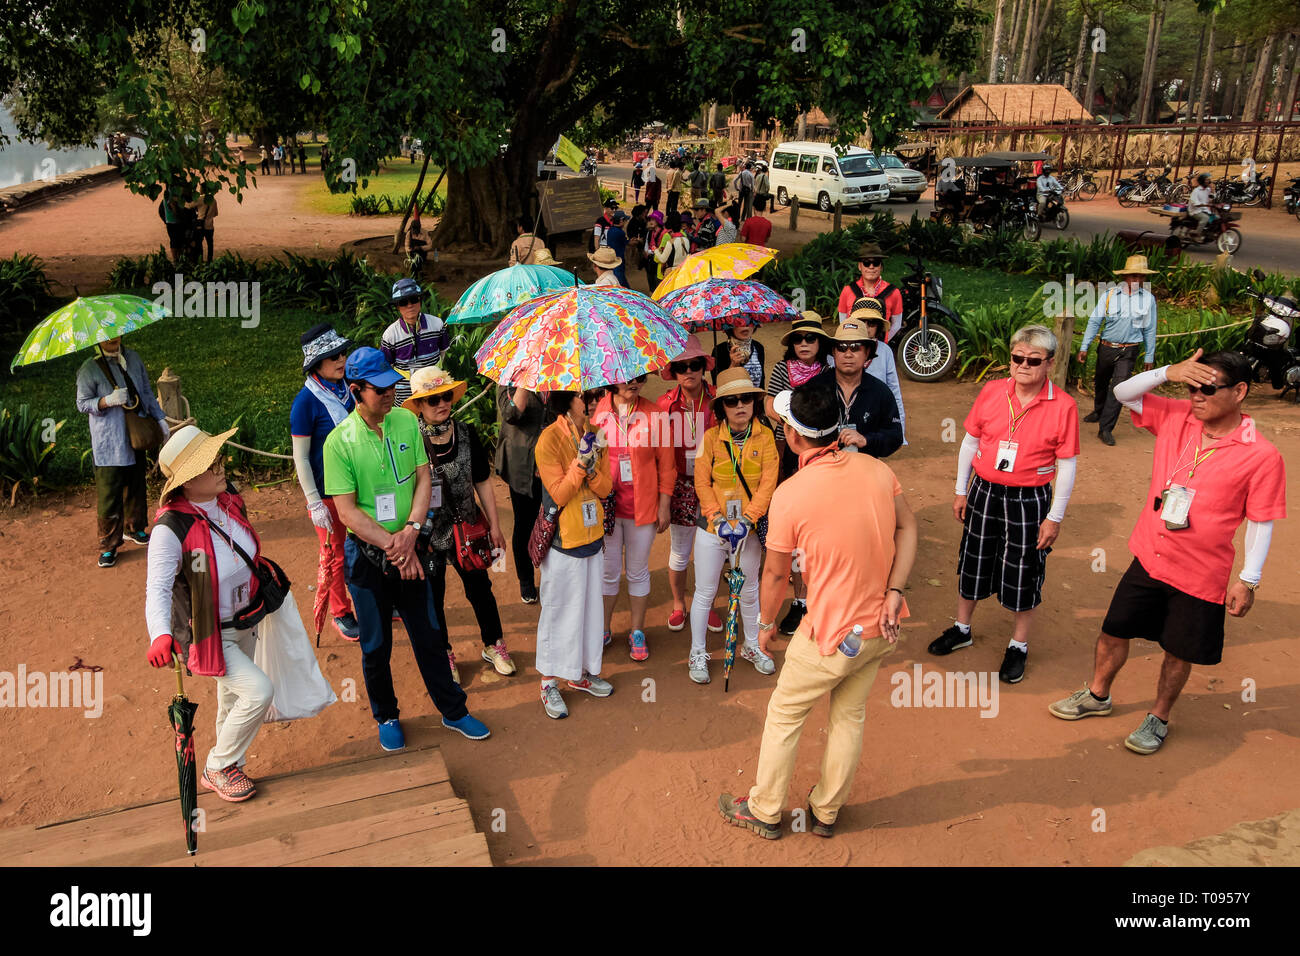 Osten asiatische Touristen montiert mit Führung am Haupteingang des berühmten 12 thC Tempel Angkor Wat, 7 Wunder der Welt. Angkor, Siem Reap, Kambodscha Stockfoto